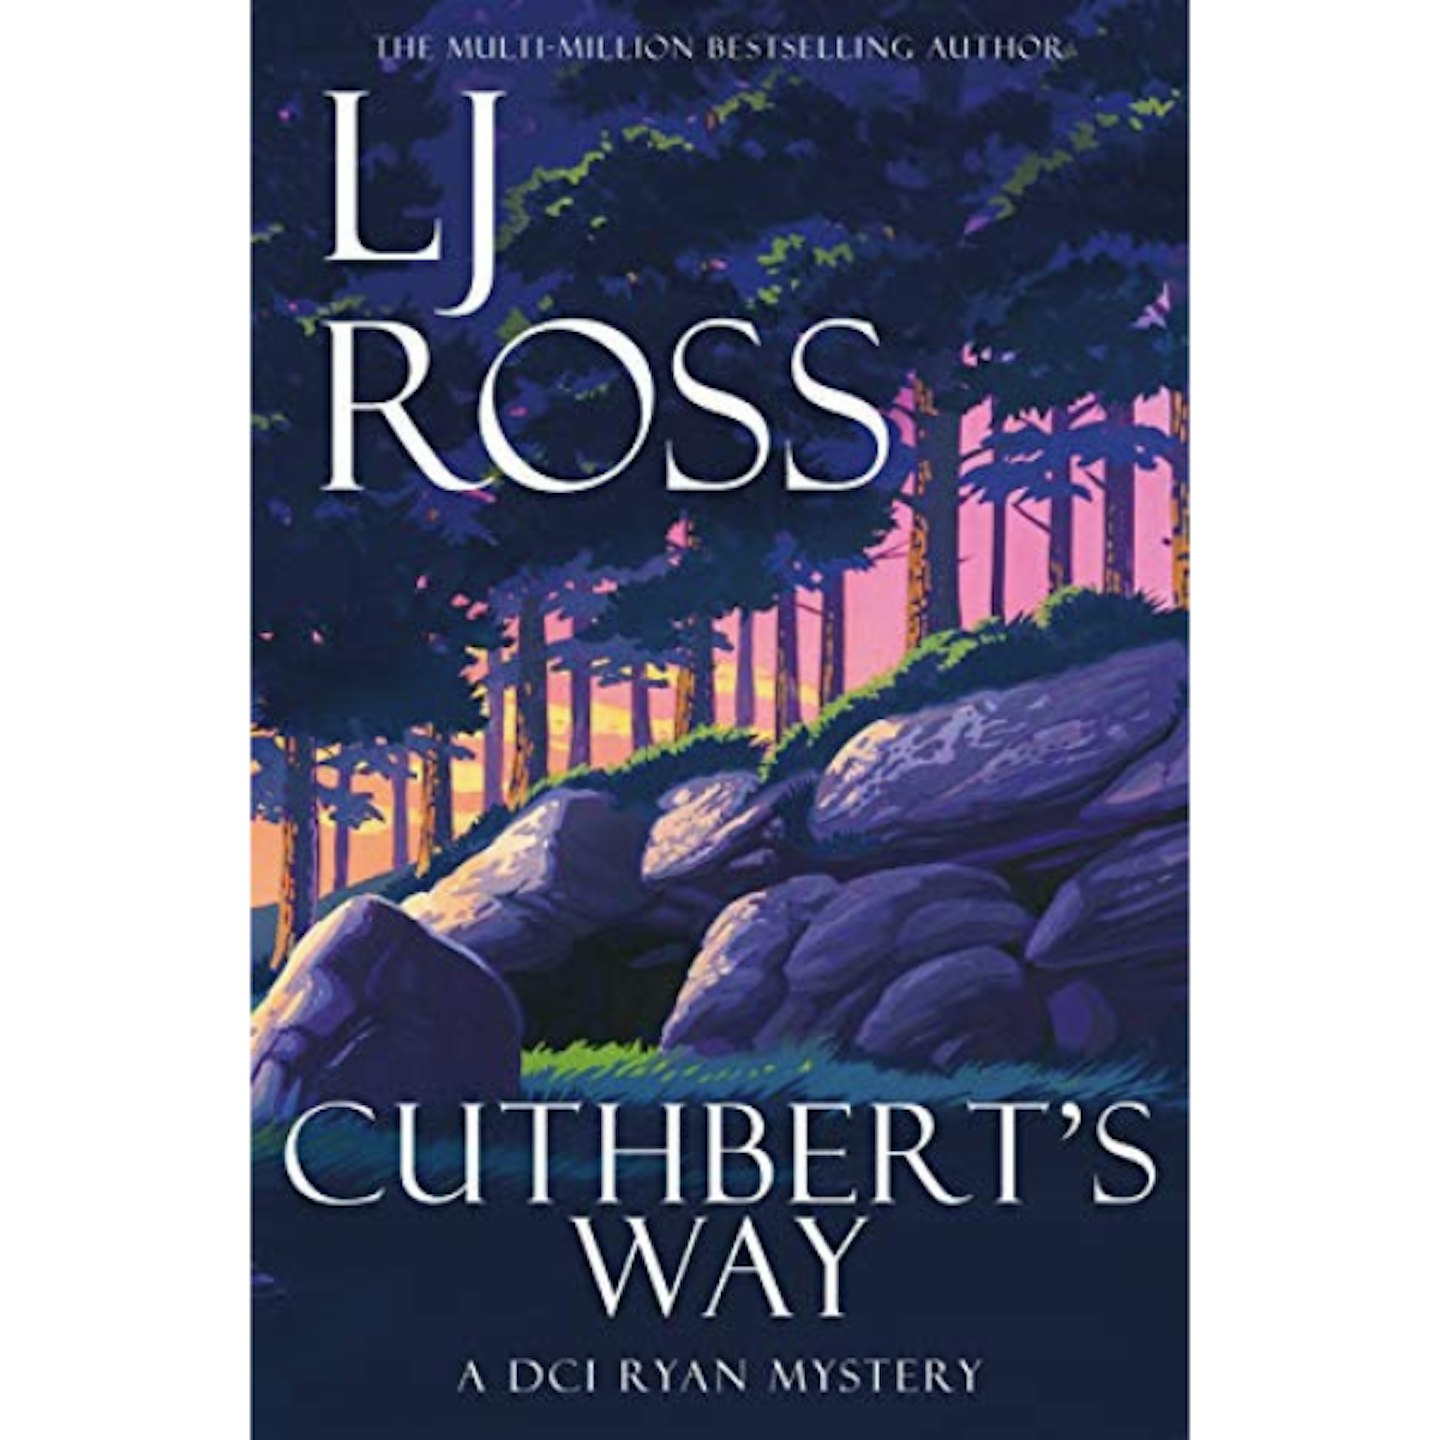 Cuthbert's Way: A DCI Ryan Mystery by LJ Ross